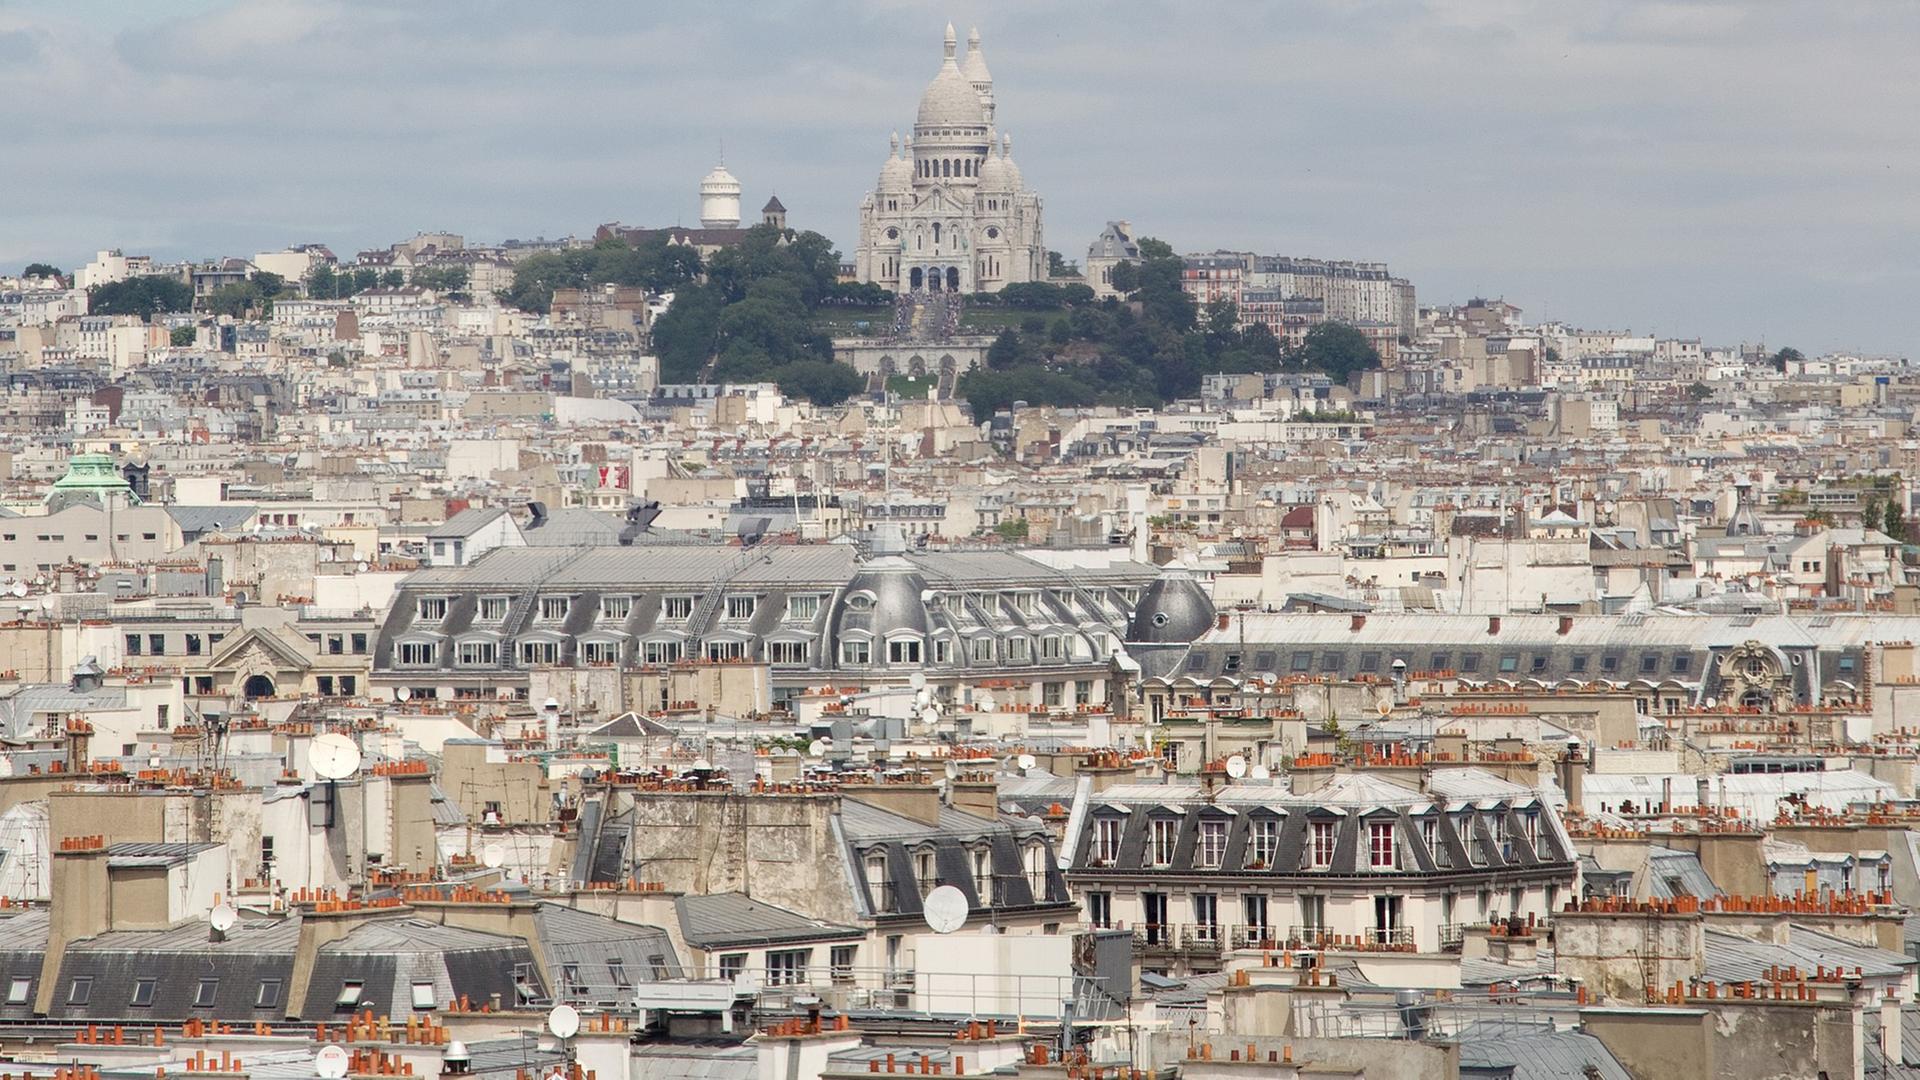 Landschaftsaufnahme: Blick auf Sacré-Coeur de Montmartre im französischen Paris